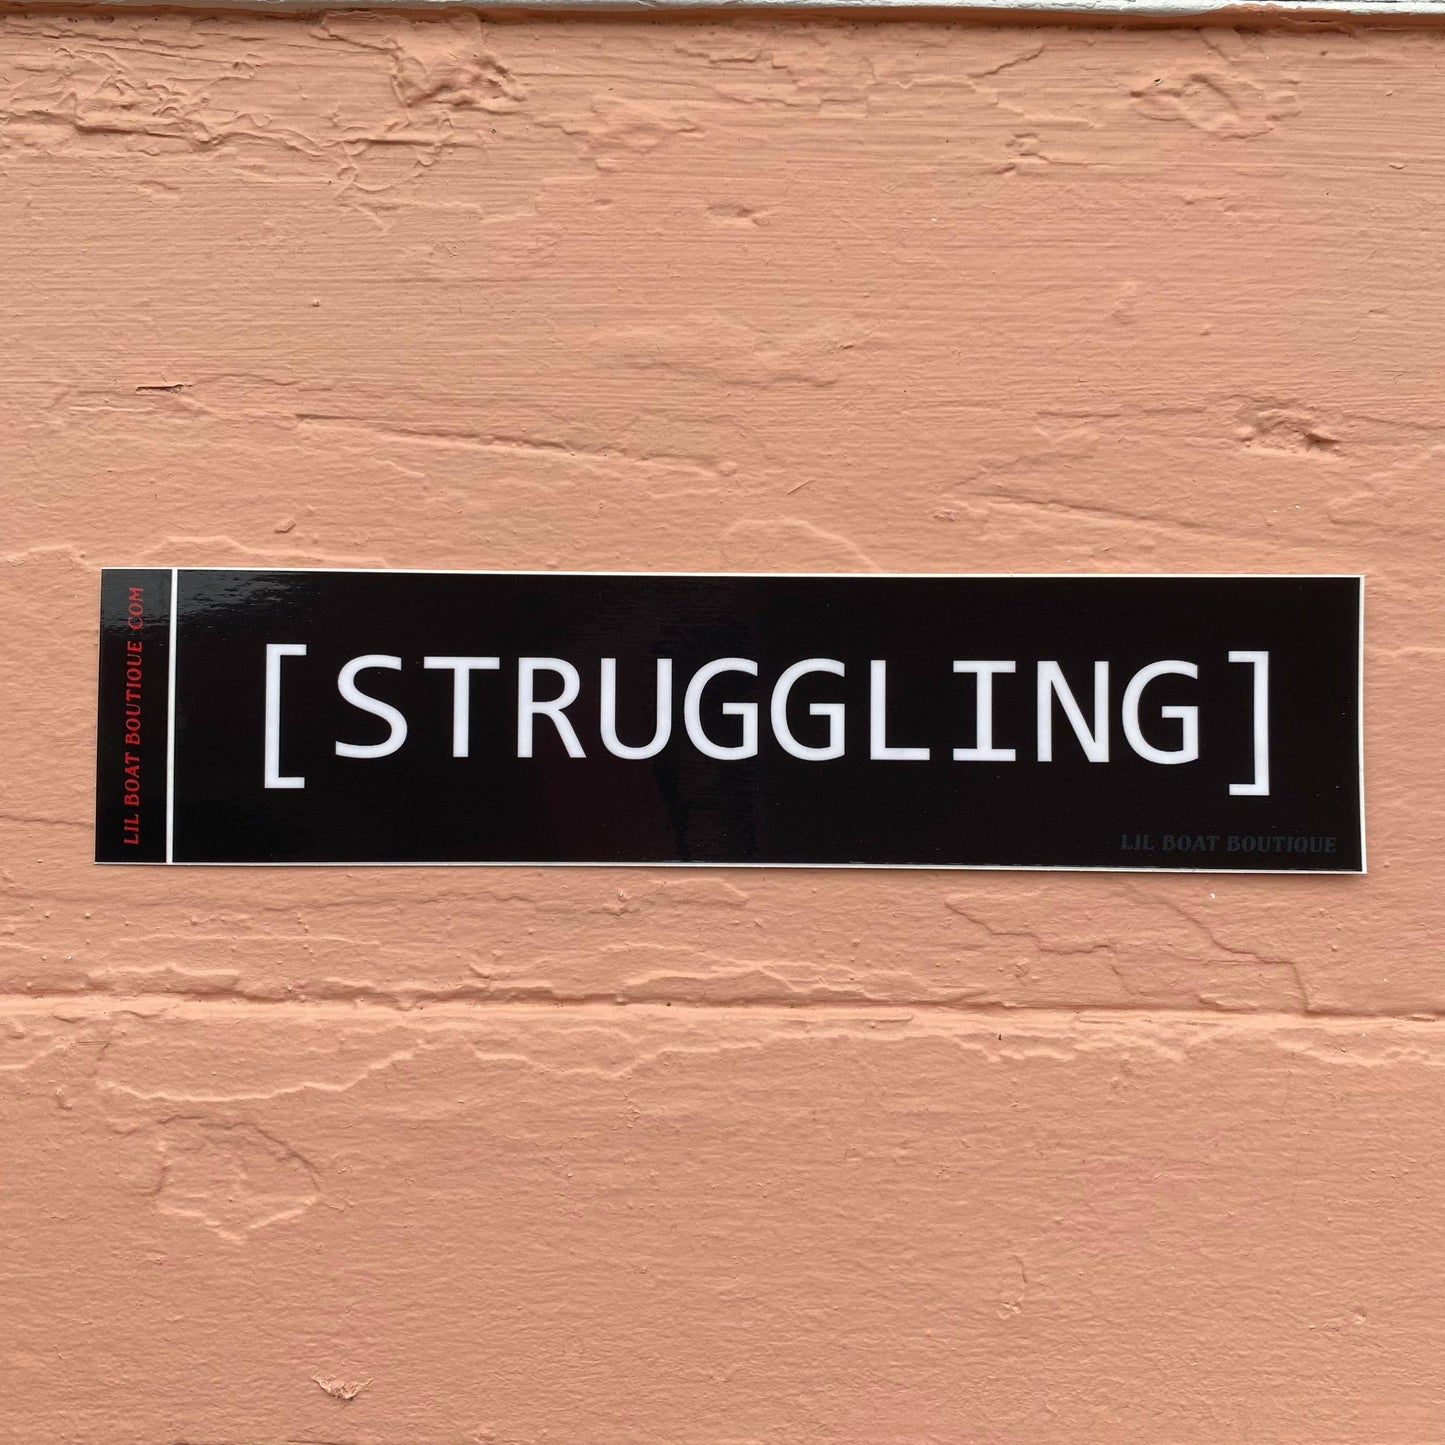 Struggling Stranger Things Bumper Sticker